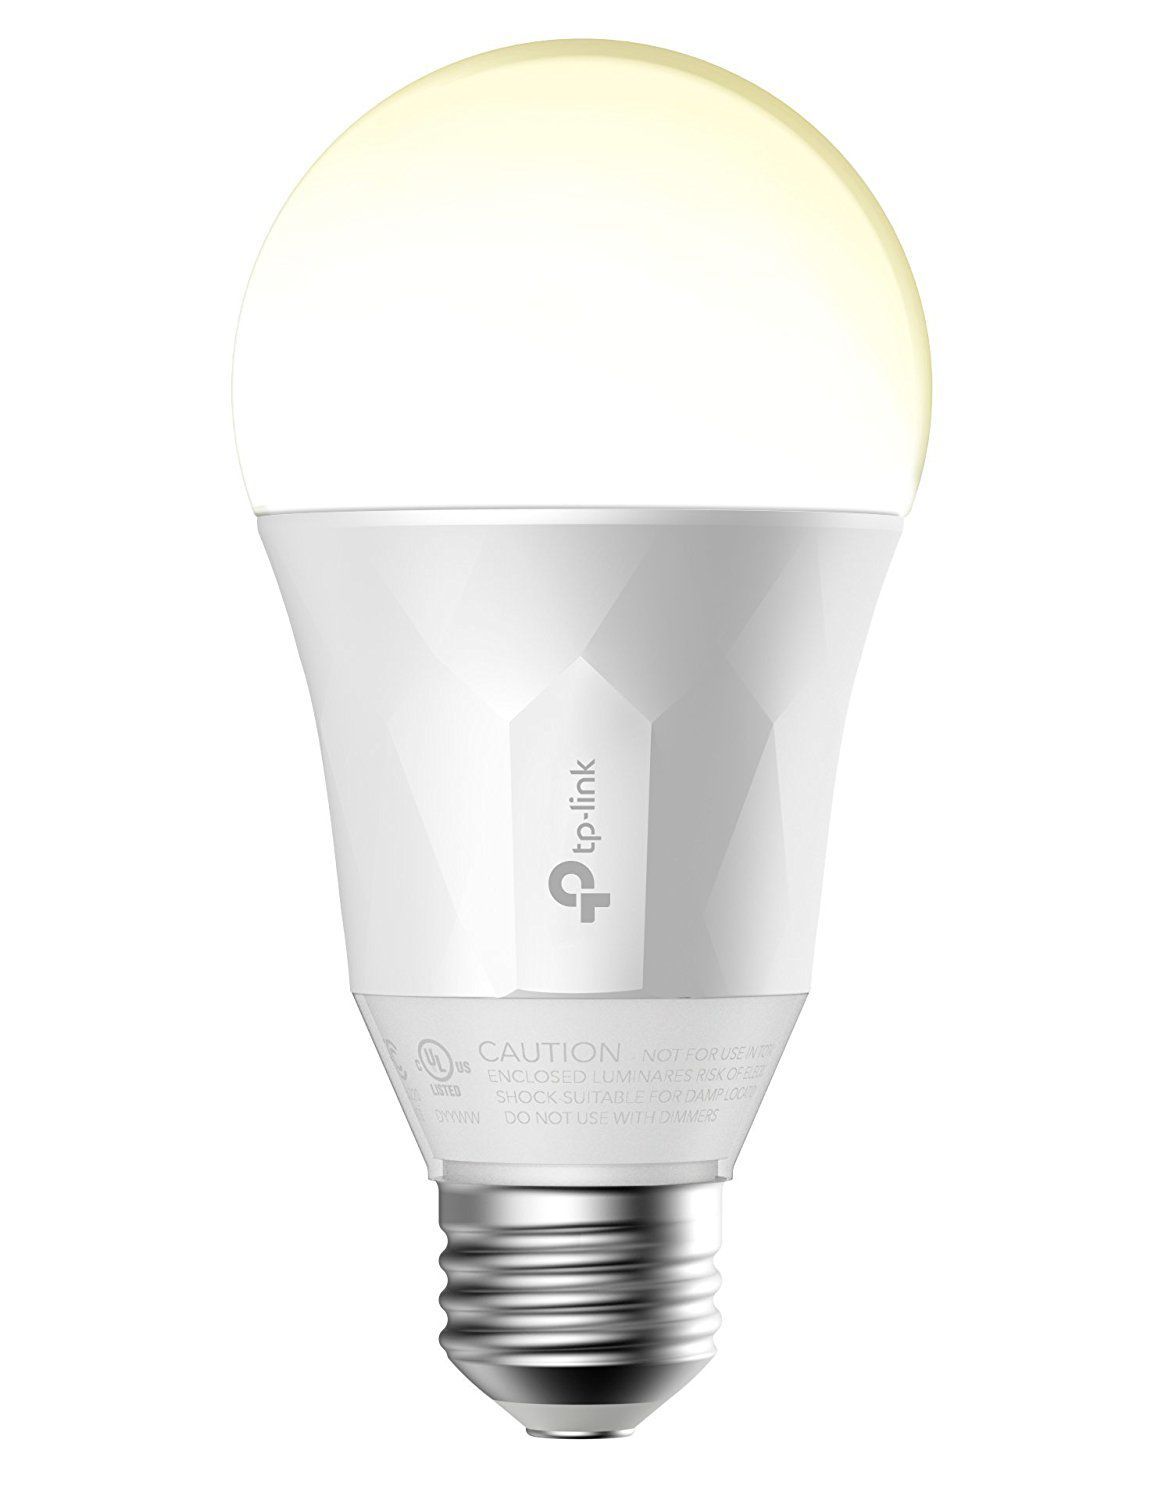 TP-Link Kasa Smart WiFi LED Light Bulb